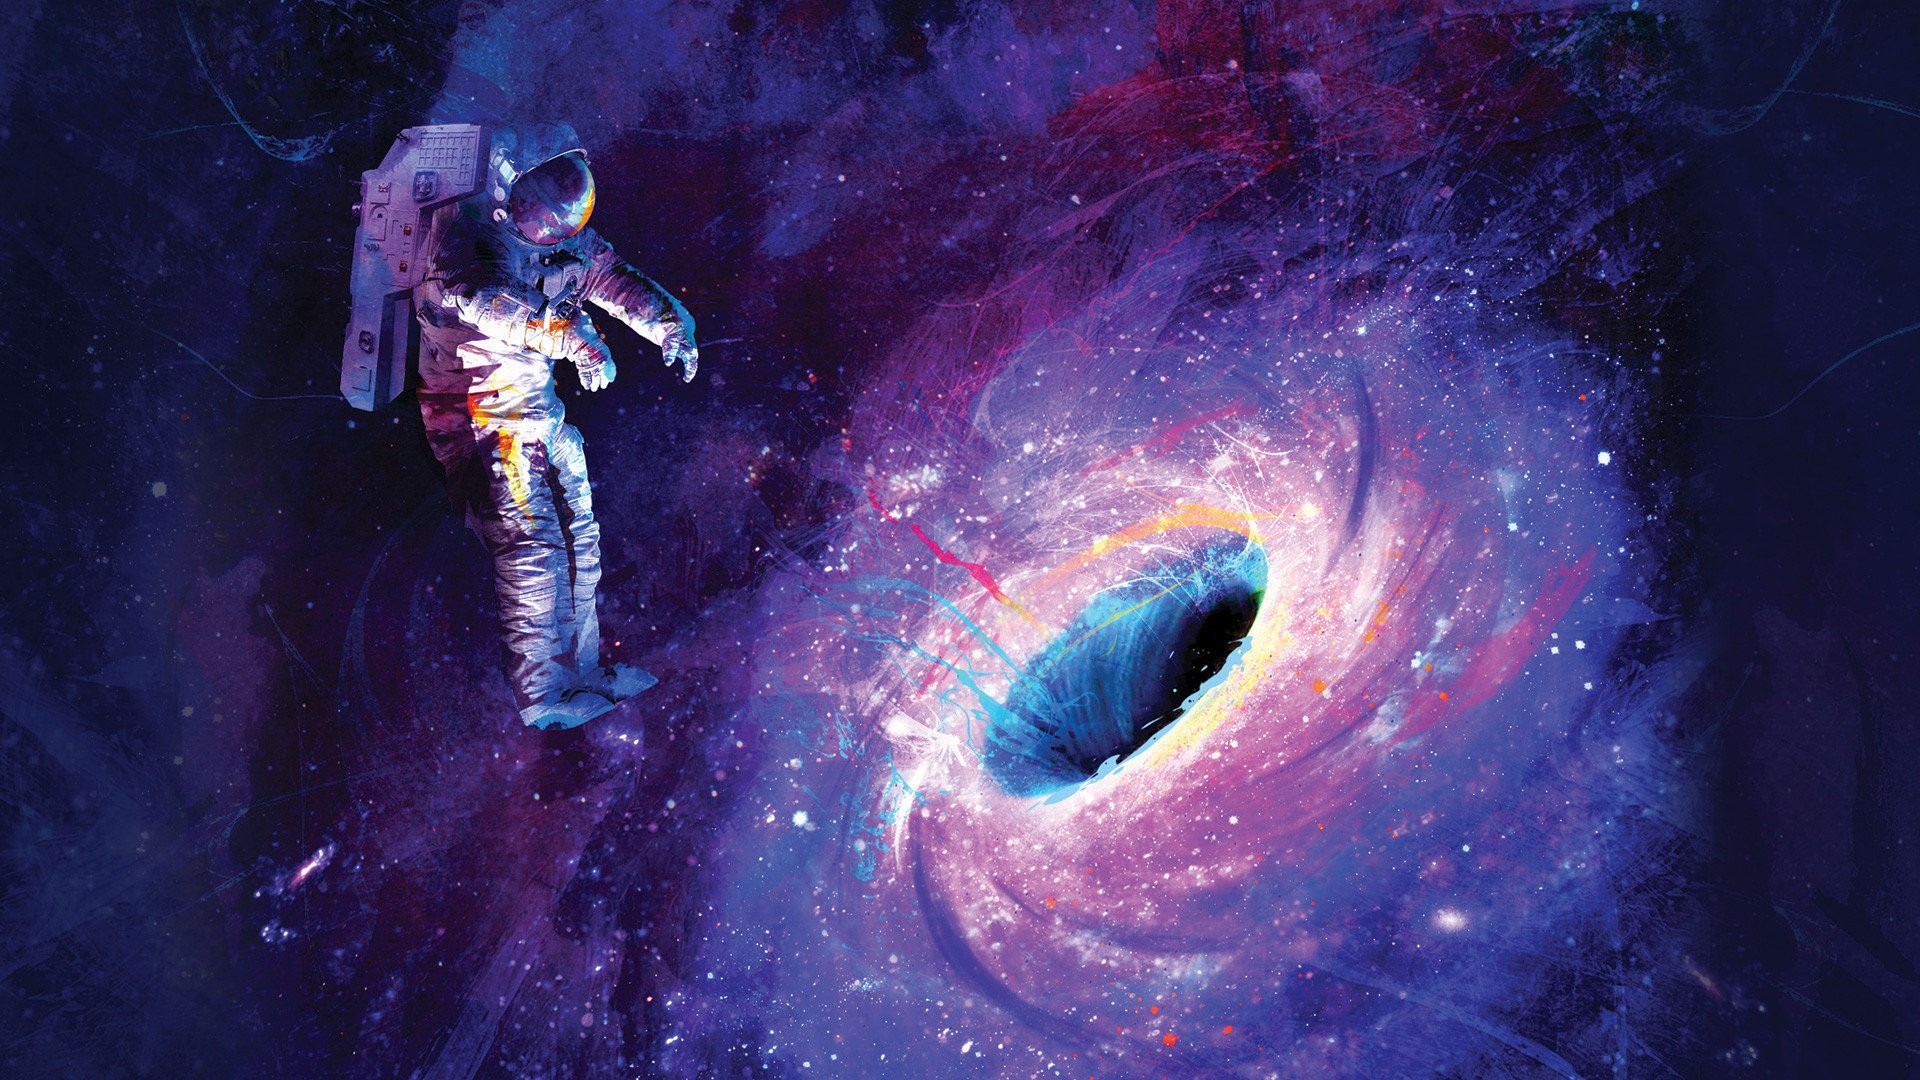 Wallpaper Astronaut artwork with black holes